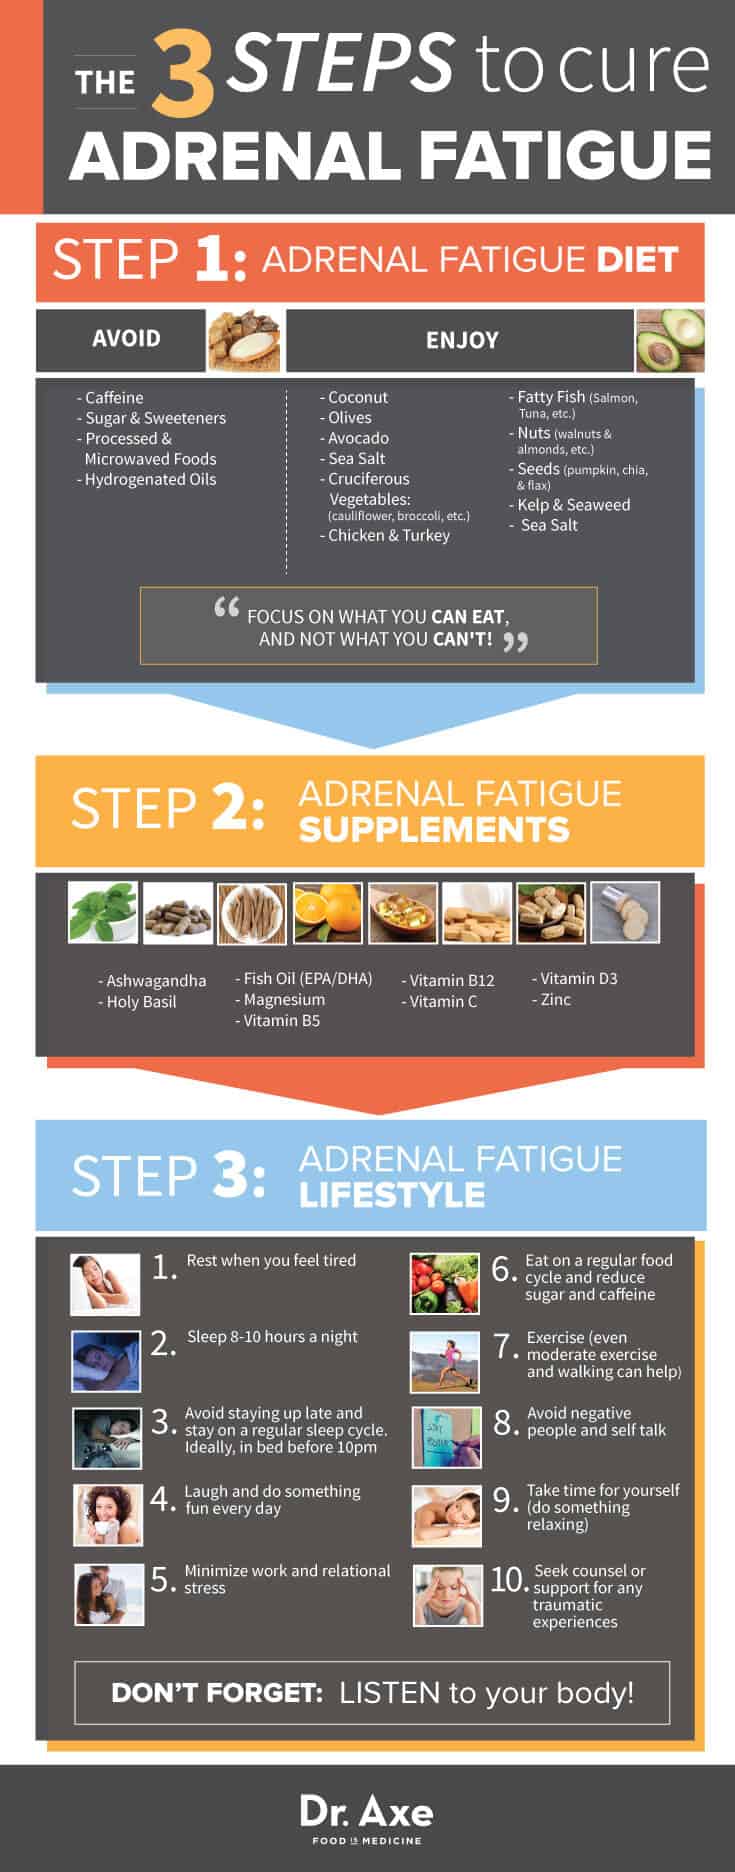 3 Steps To Heal Adrenal Fatigue Naturally Dr Axe